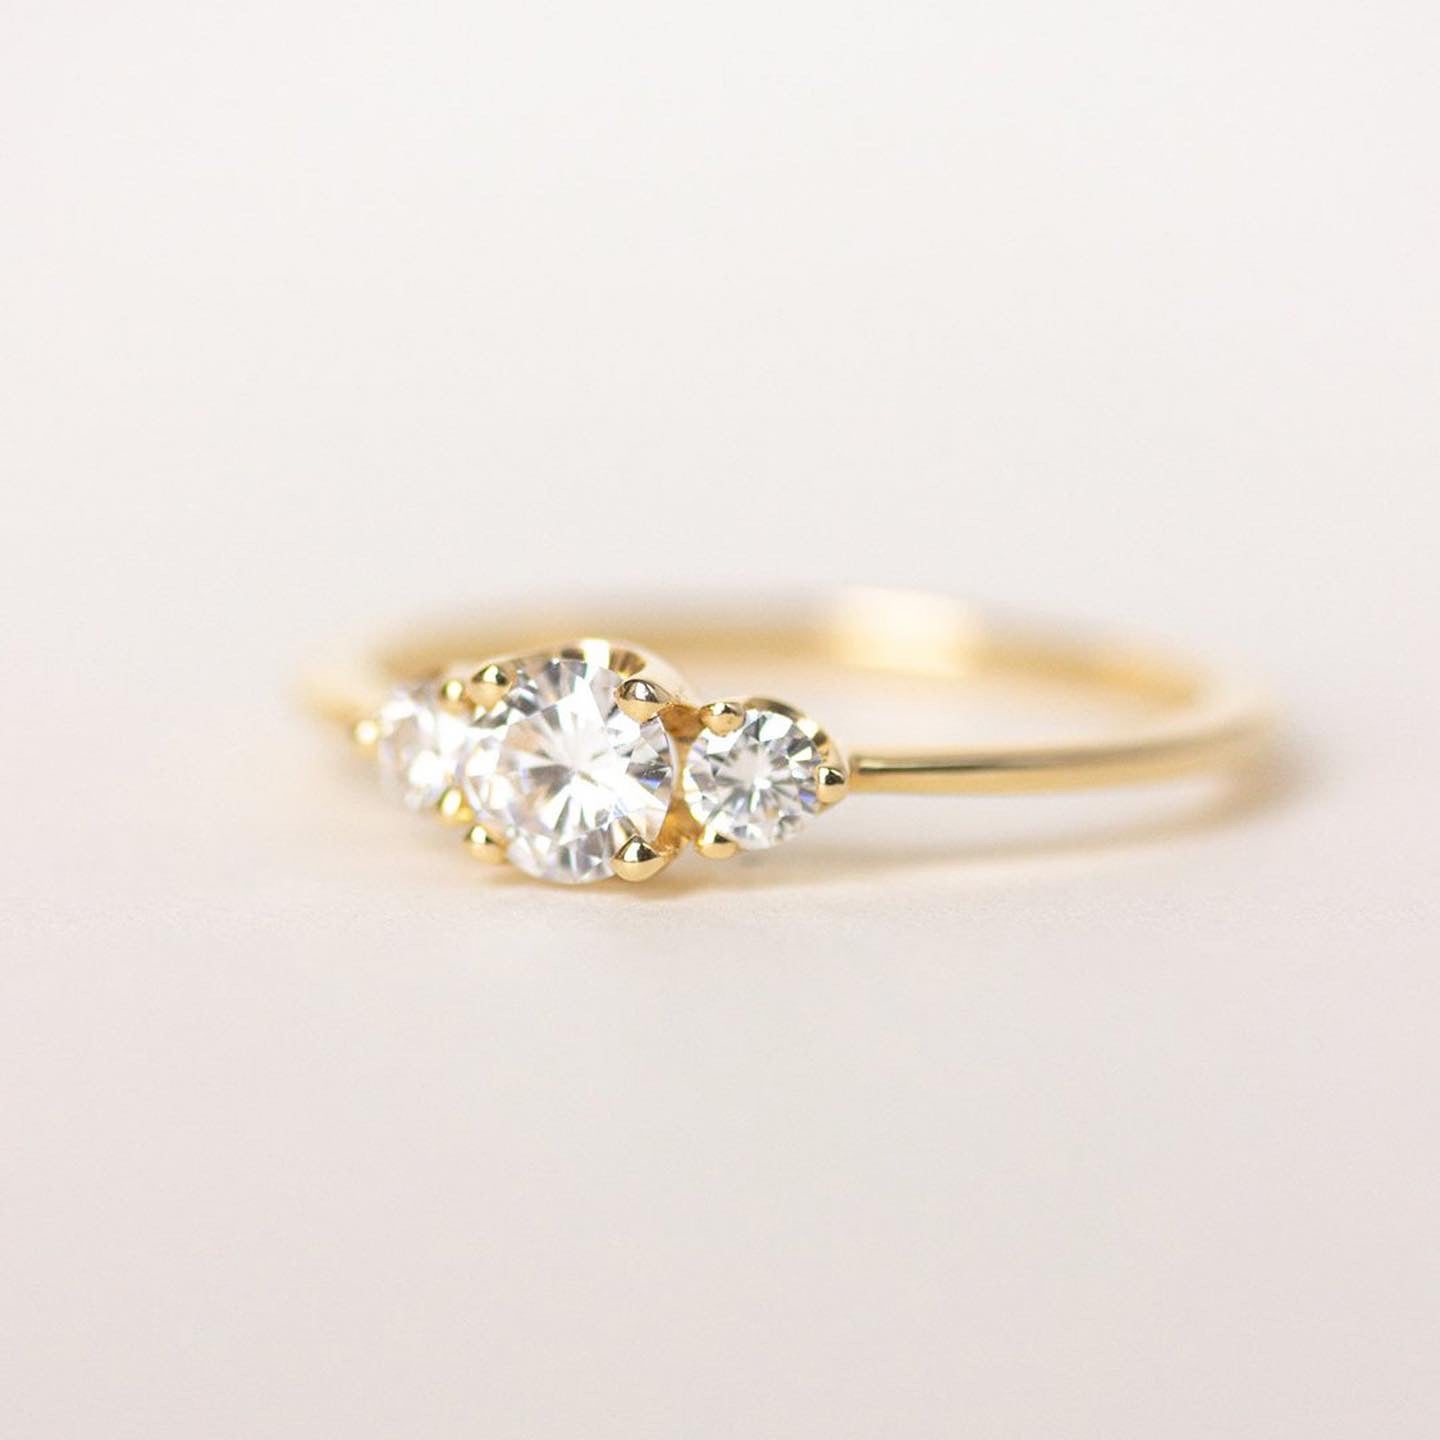 Three Diamond Engagement Ring in 14k Gold.